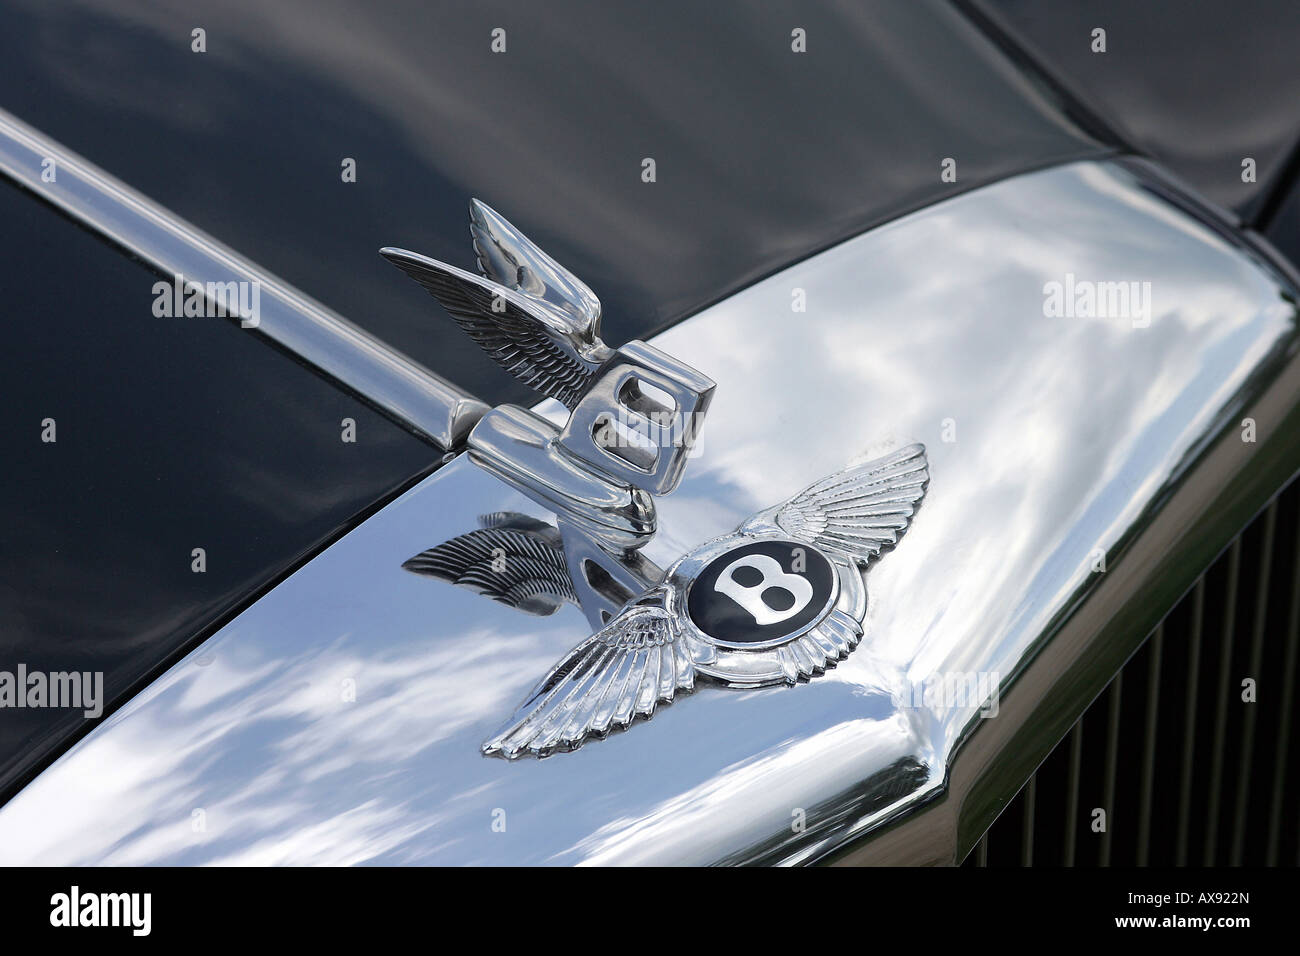 Fichier:Bentley badge and hood ornament.jpg — Wikilivres